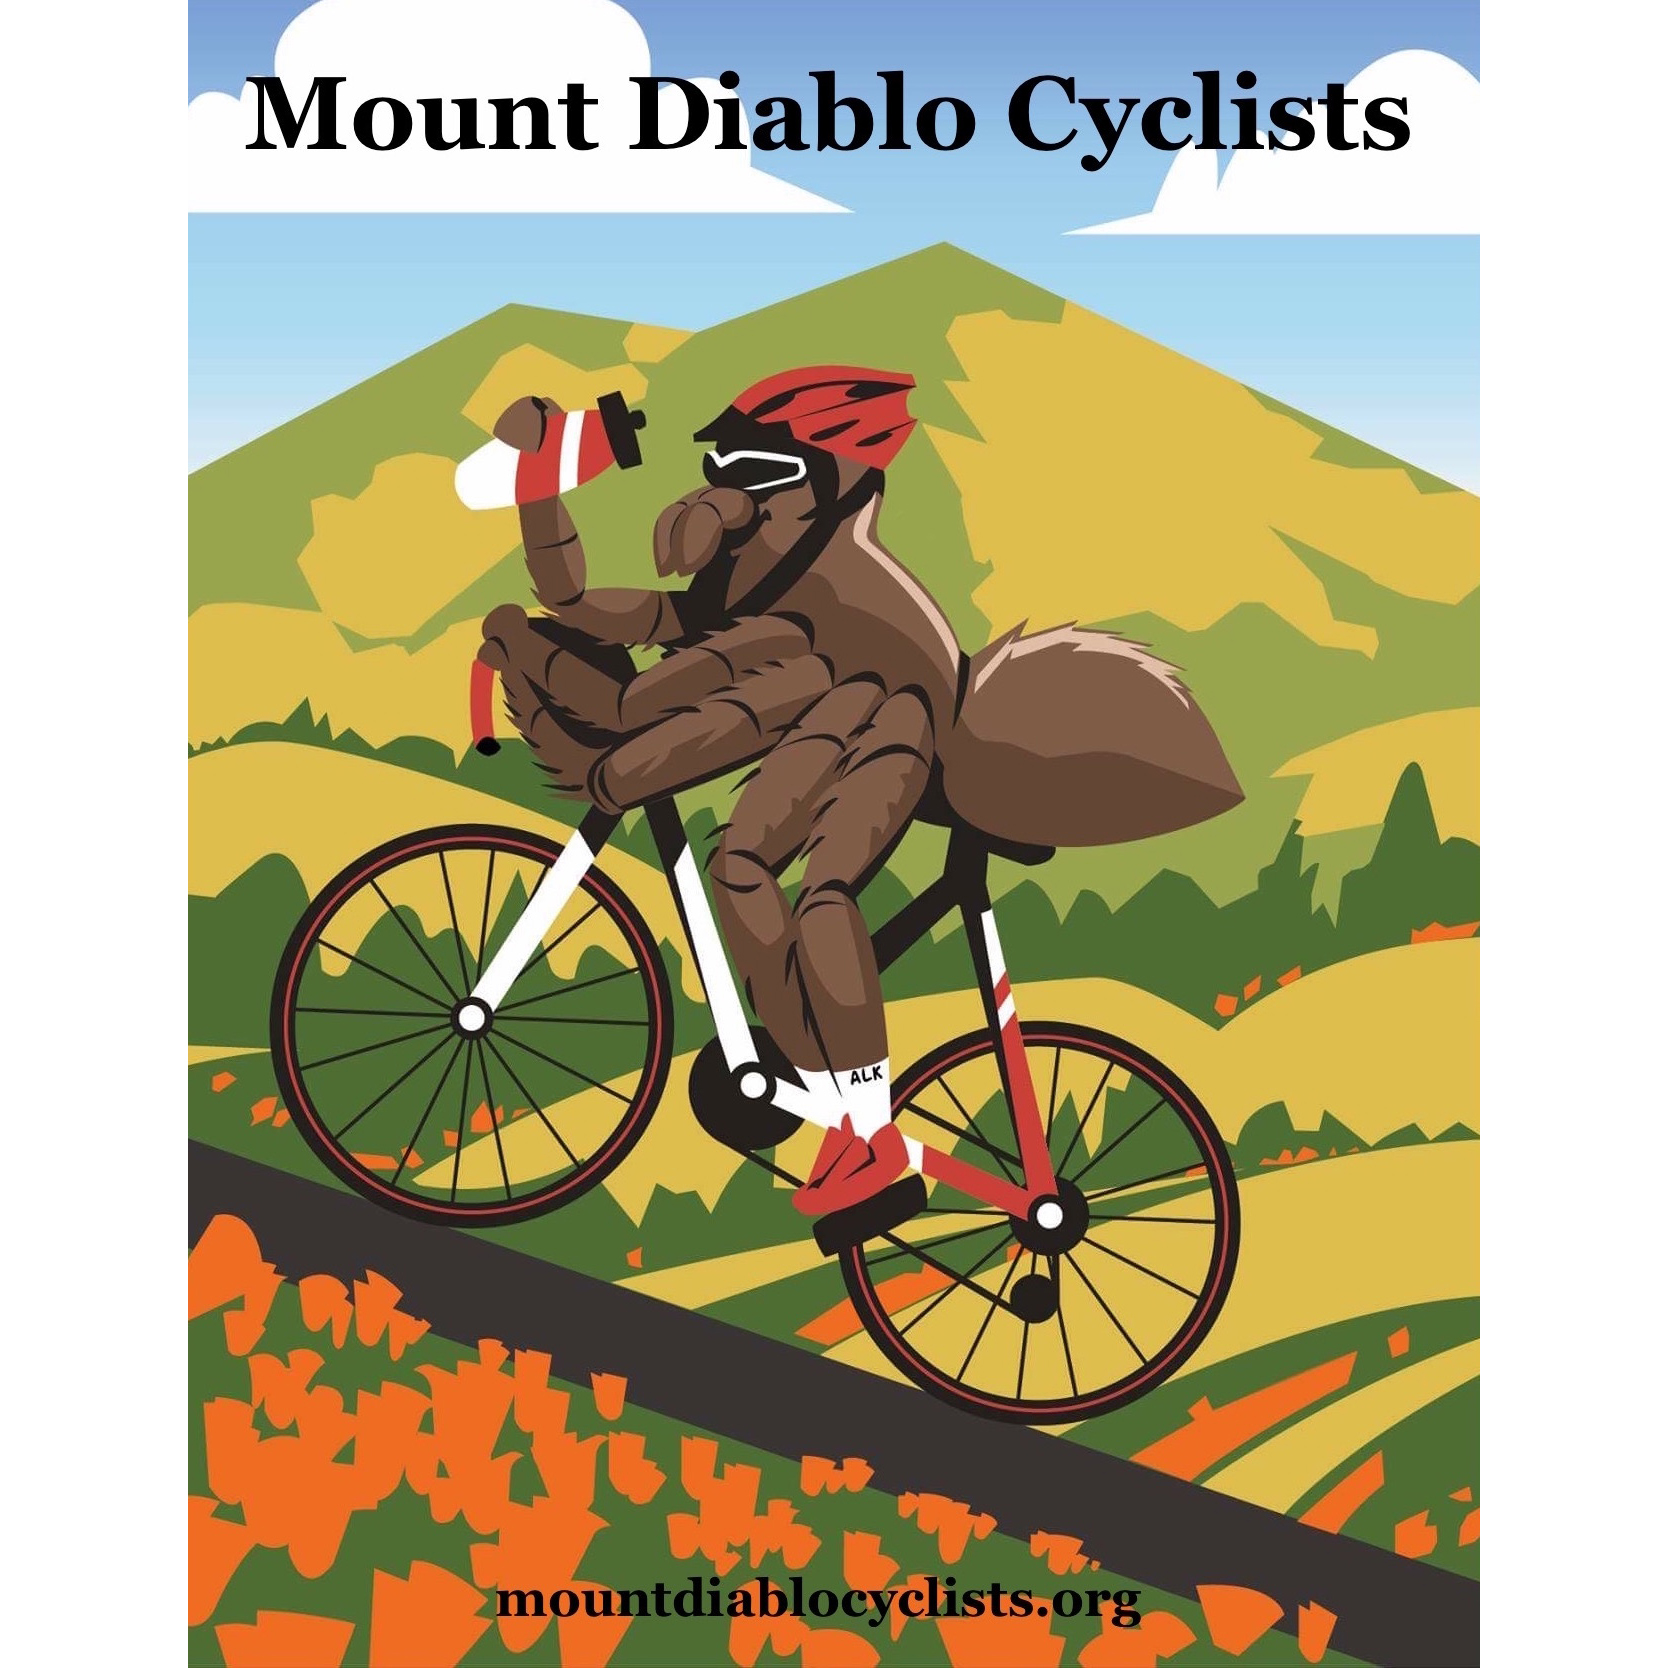 Mount Diablo Cyclists